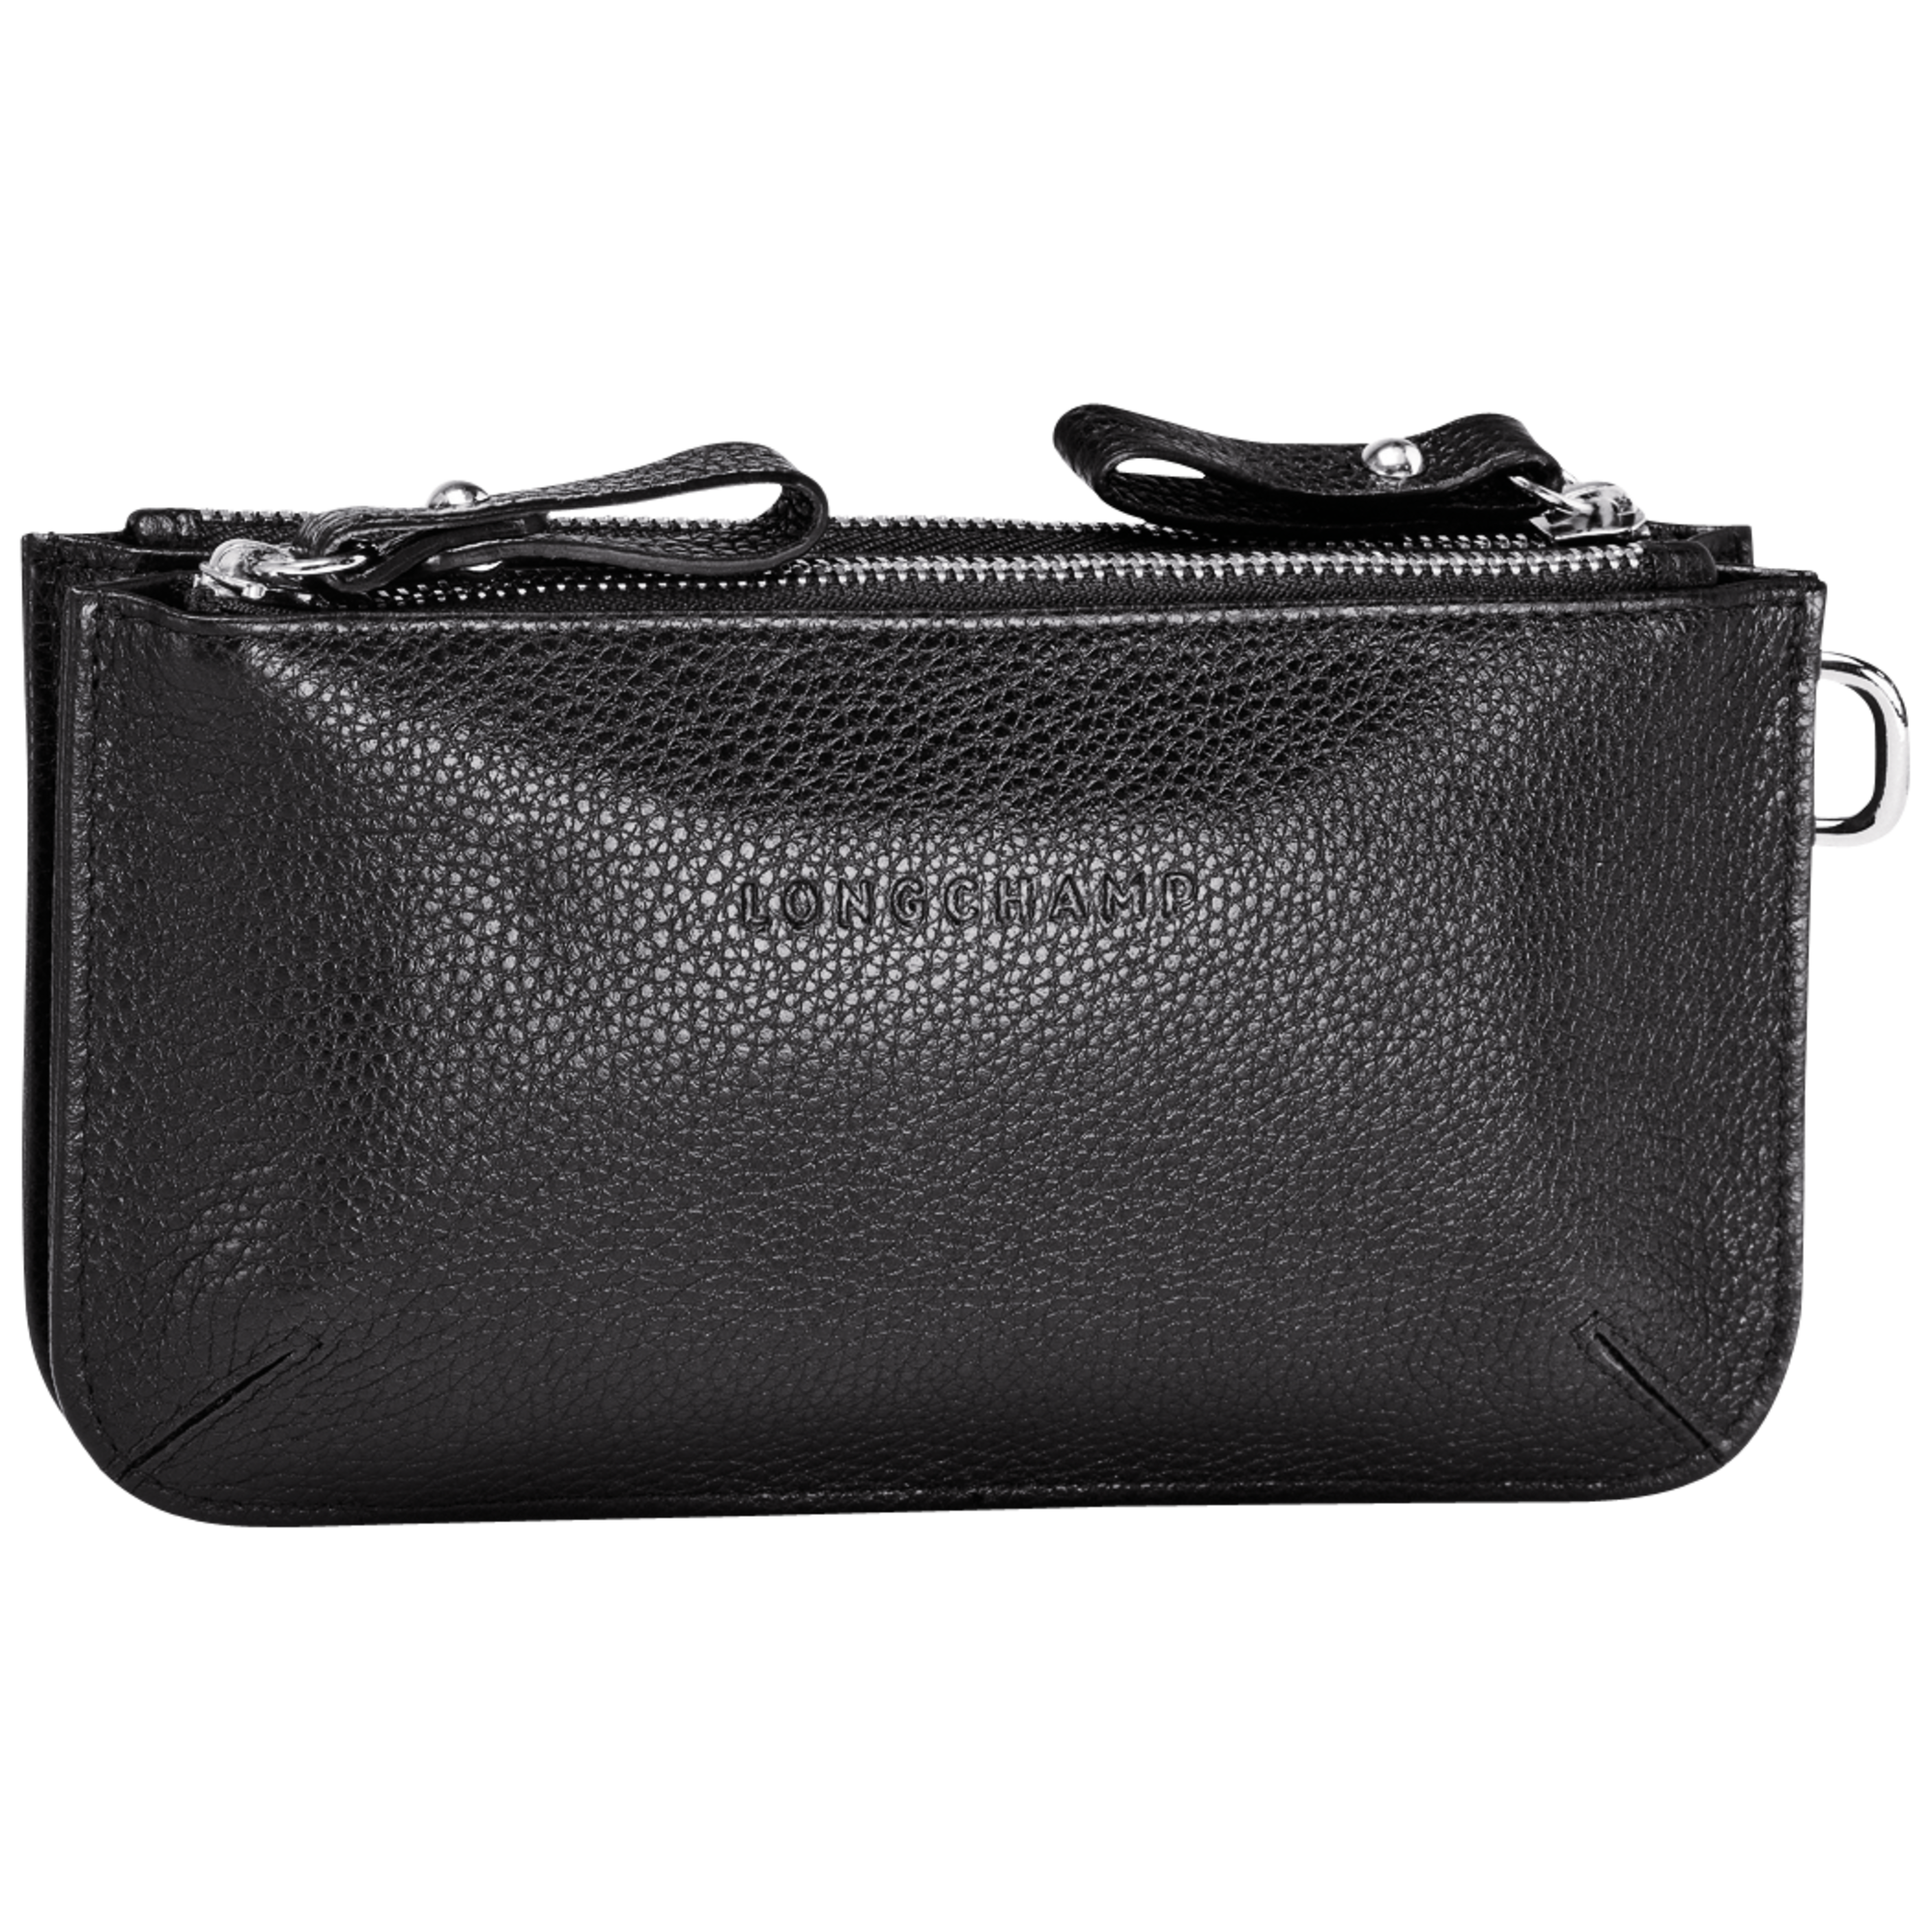 longchamp leather coin purse